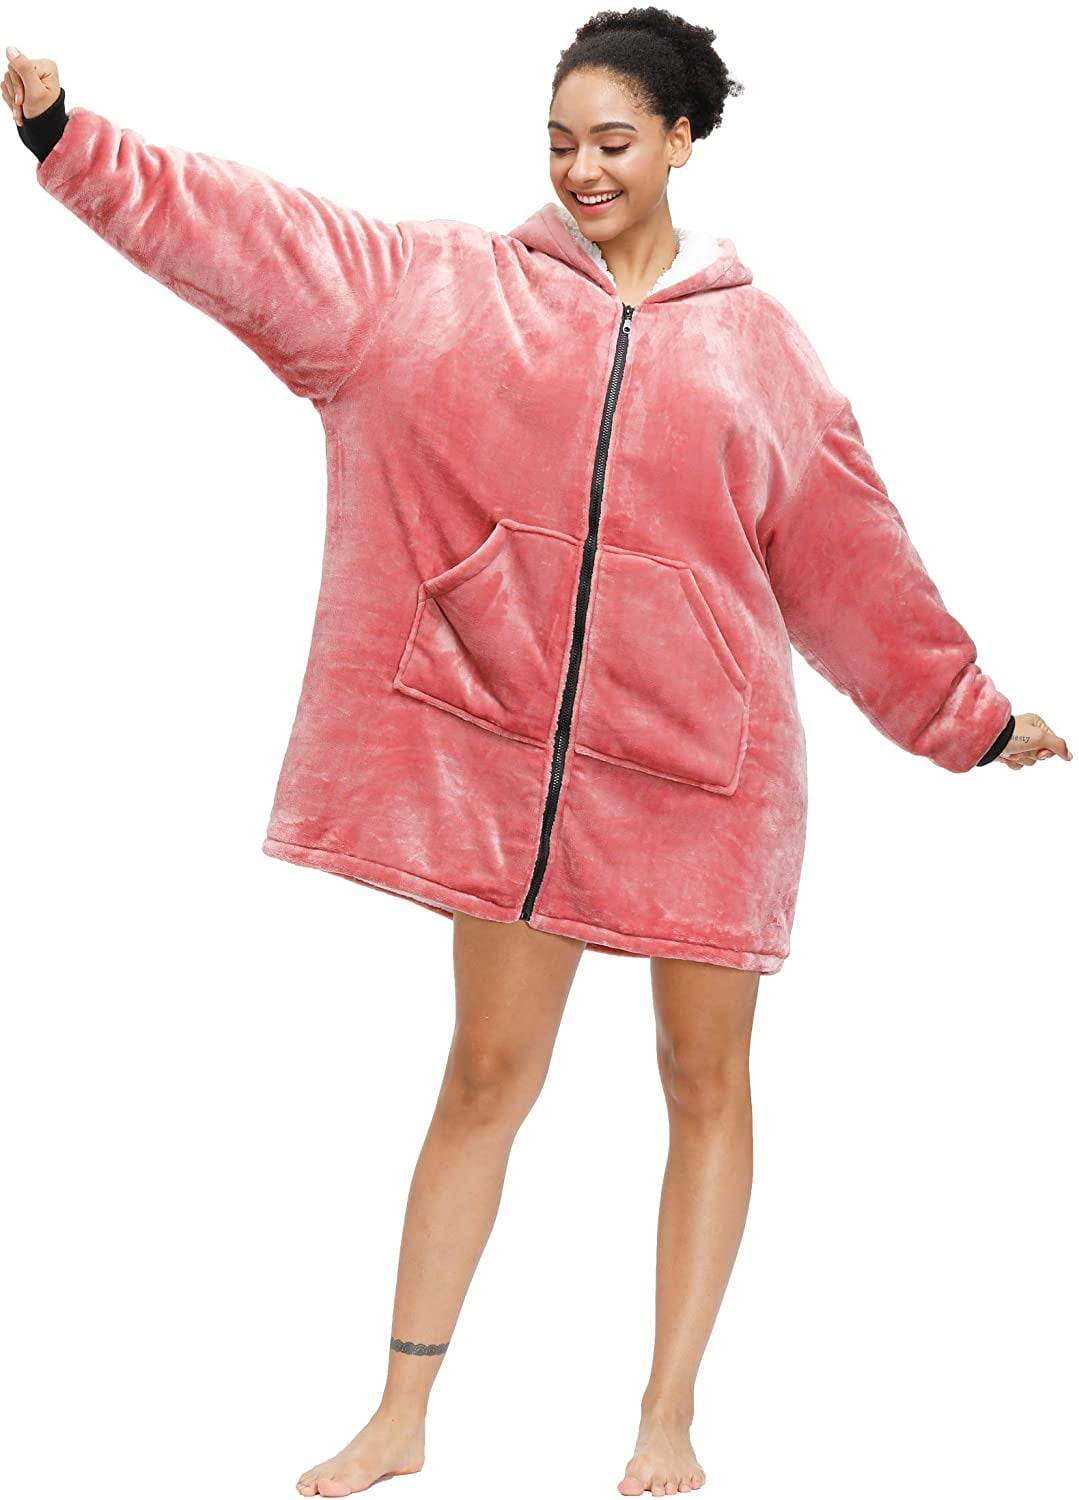 Details about   Blanket Sweatshirt Hoodie Plush Warm Winter Hooded Coats Bathrobe Sleepwear-NEW 